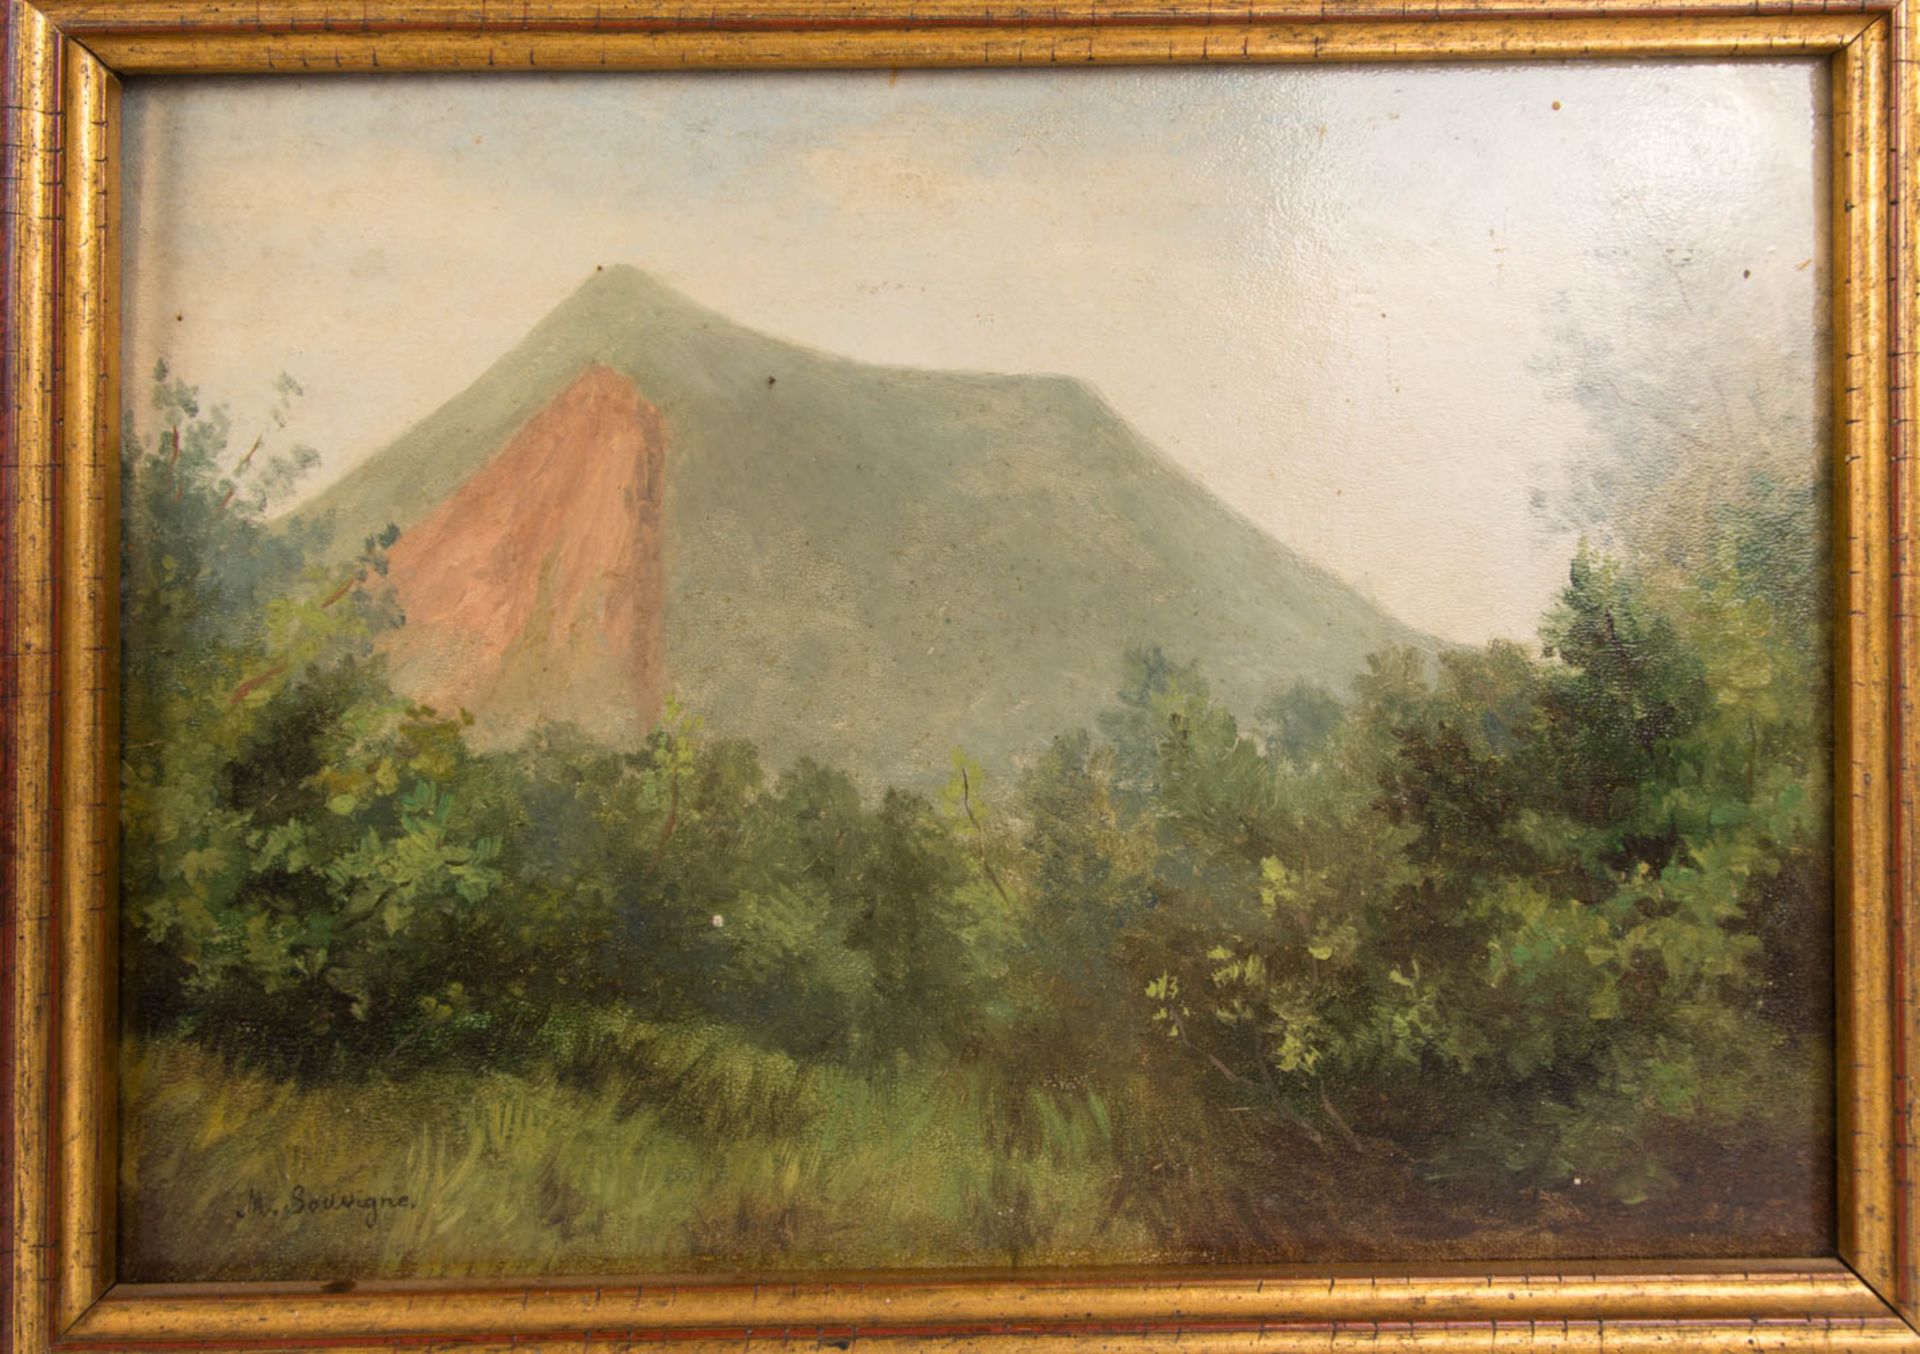 M. Souvigne, Zwei pittoreske Landschaftsszenen, Acryl auf Platte, 20. Jh. - Image 4 of 6